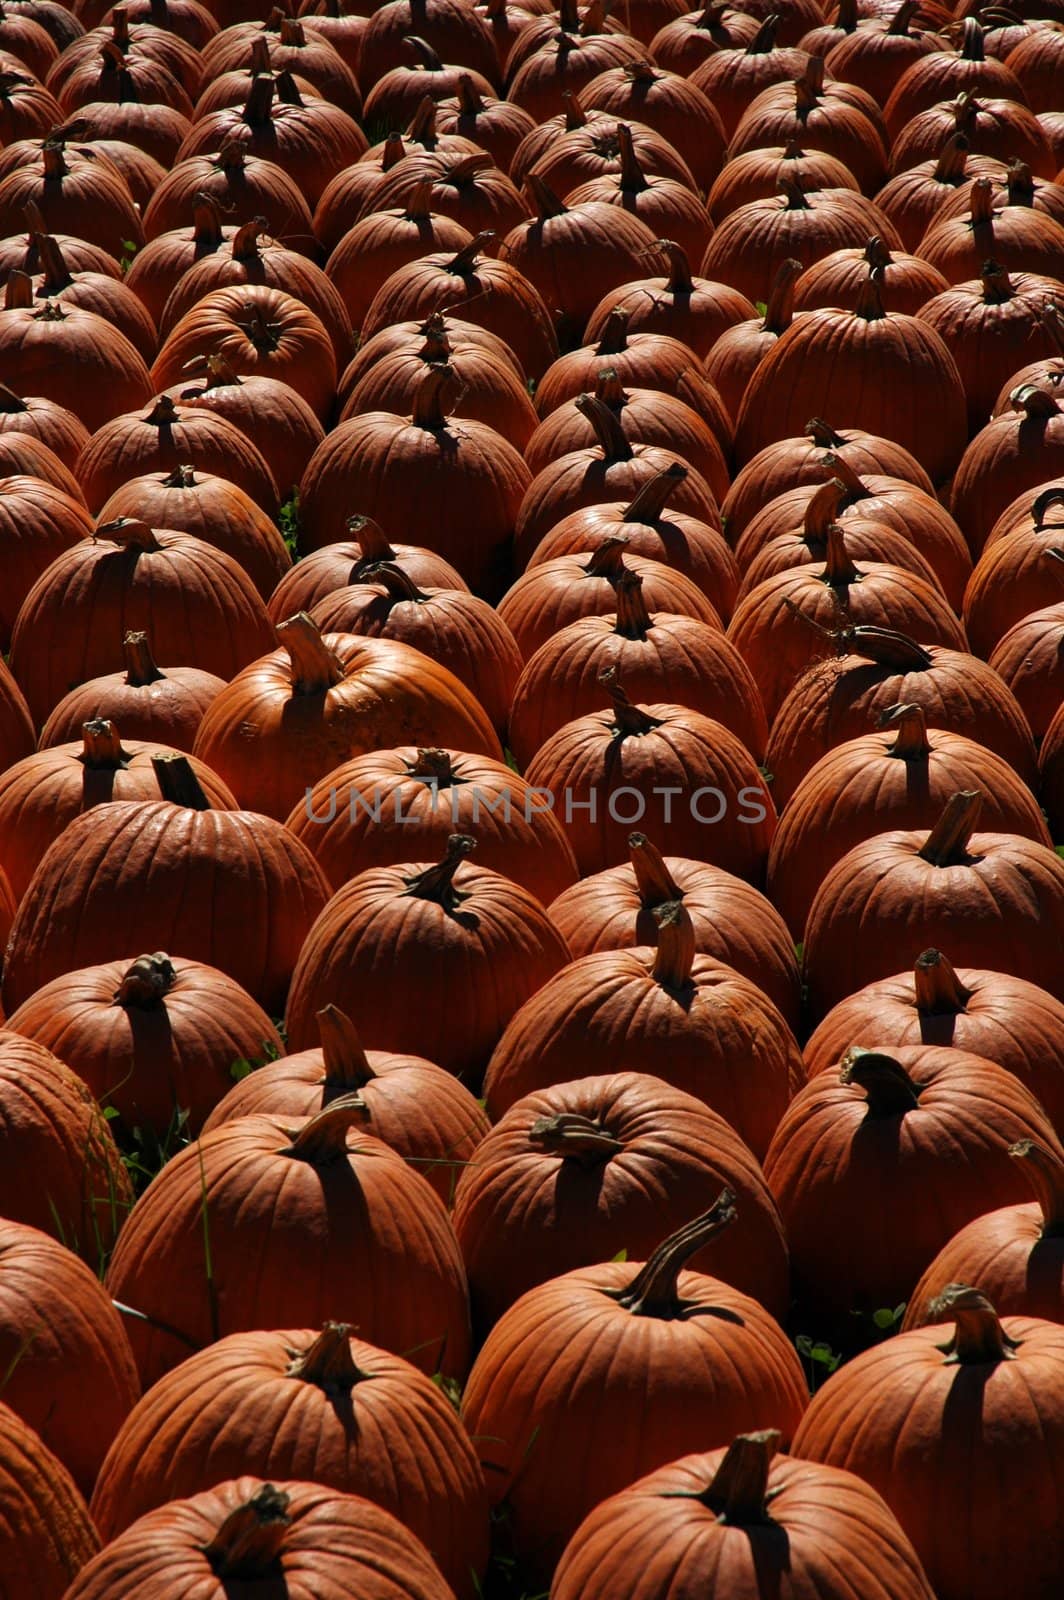 Black and white image of pumpkins after a harvest.